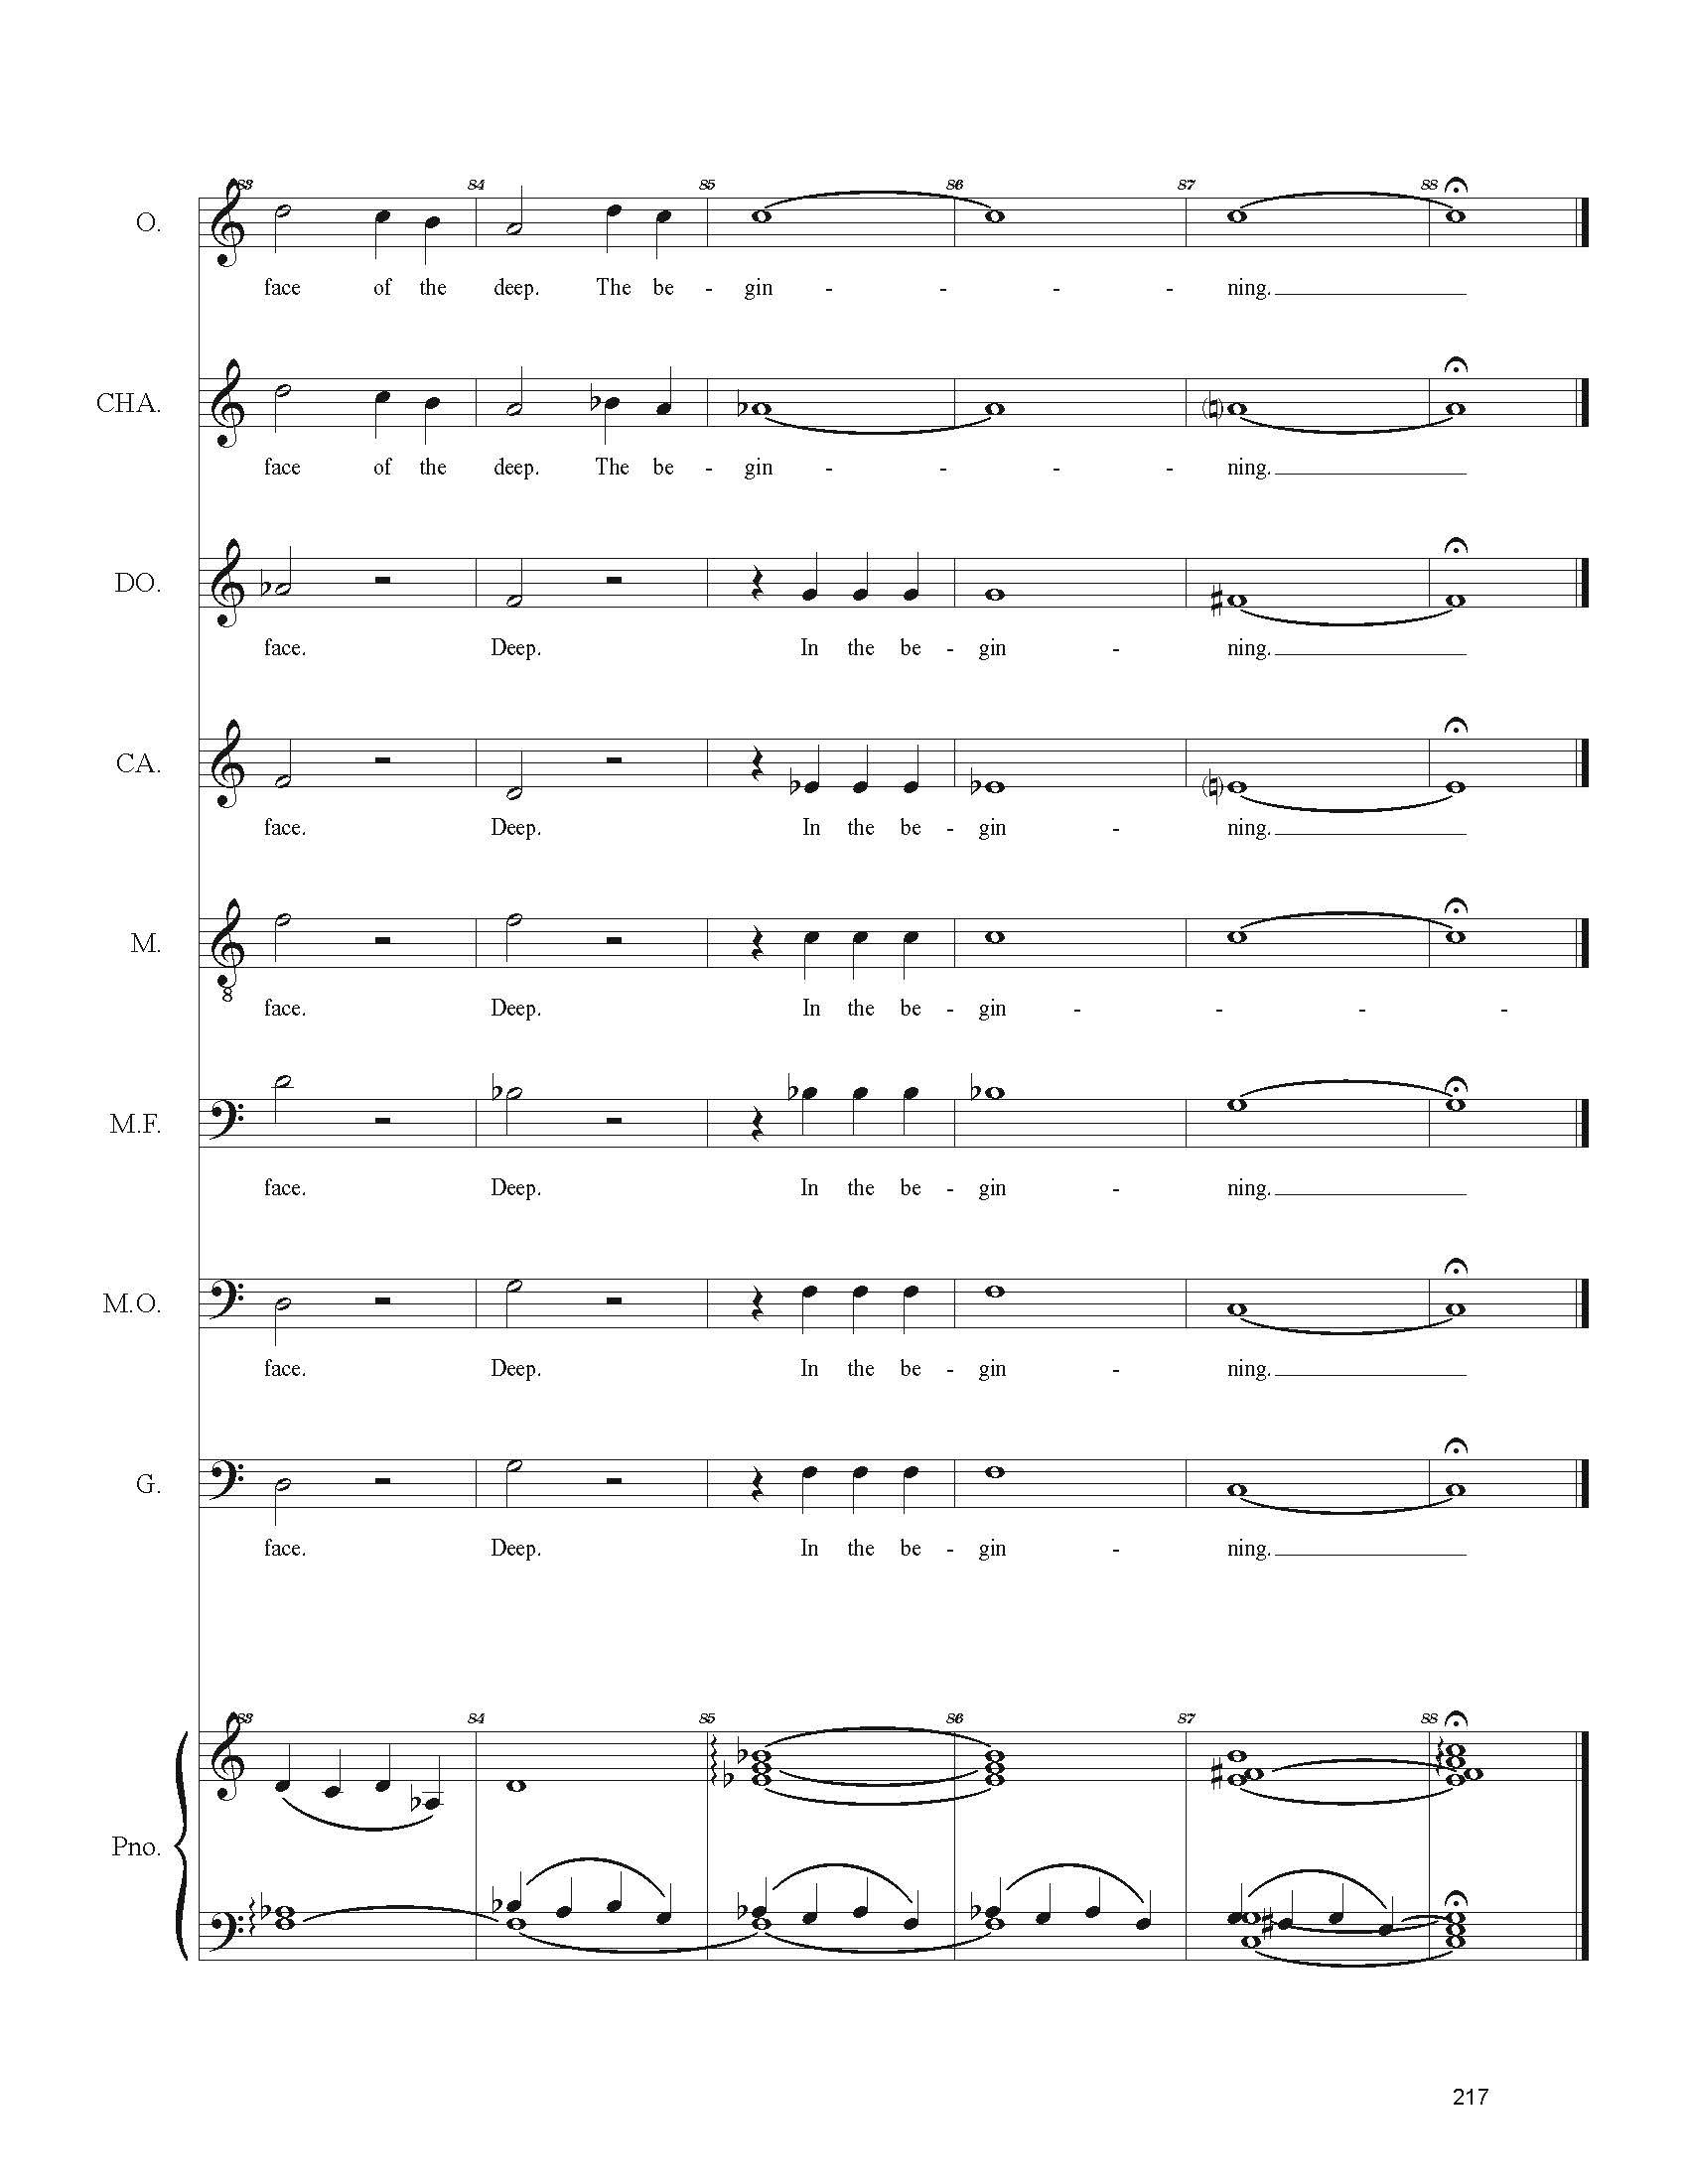 FULL PIANO VOCAL SCORE DRAFT 1 - Score_Page_217.jpg